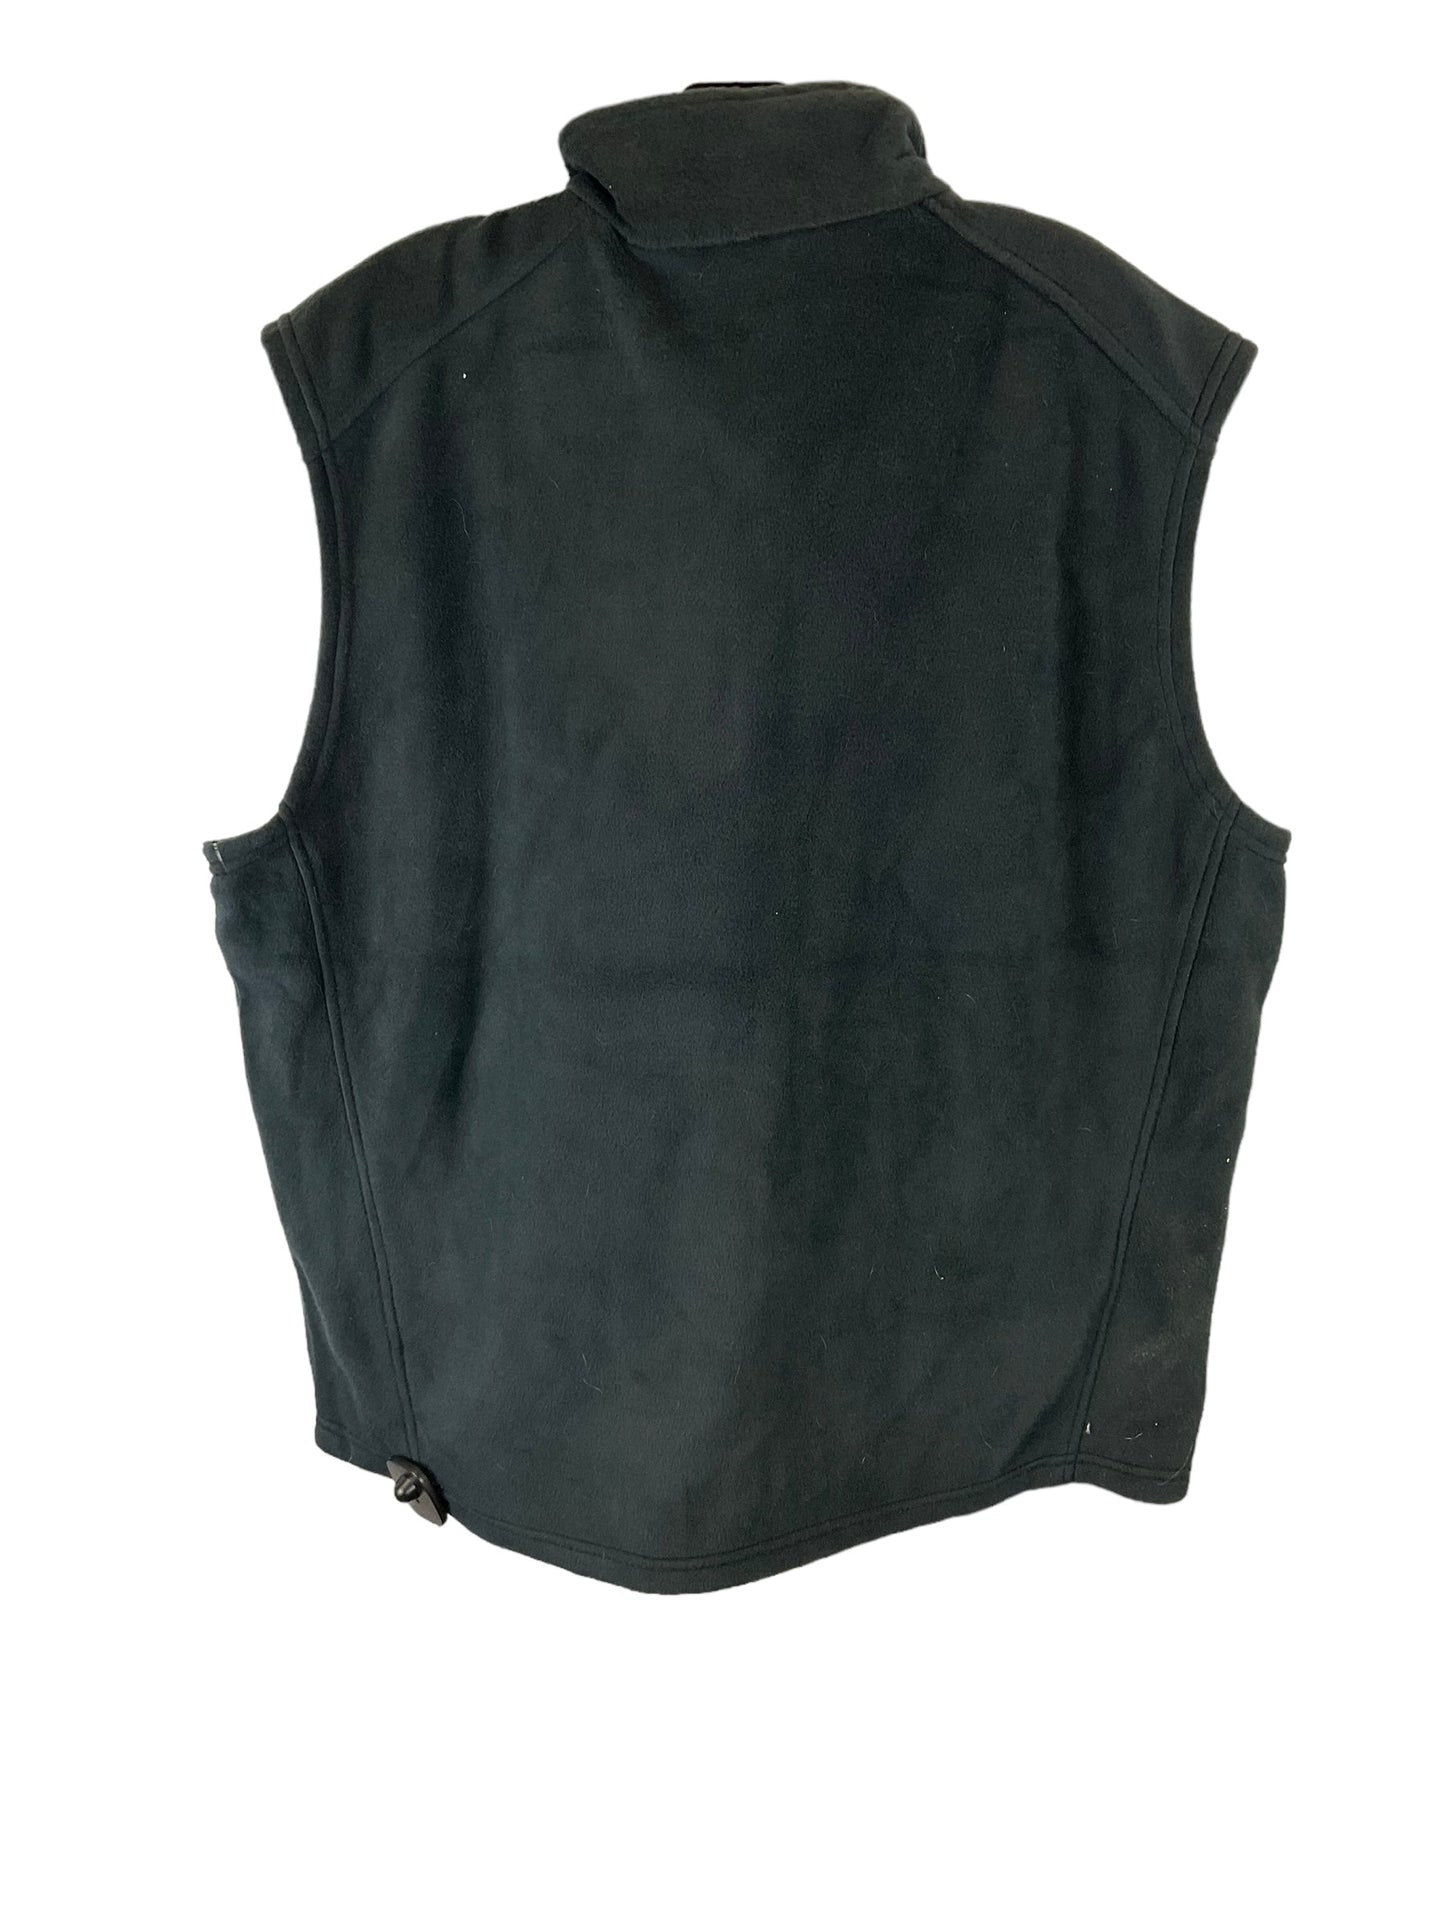 Vest Designer By Columbia  Size: Xl